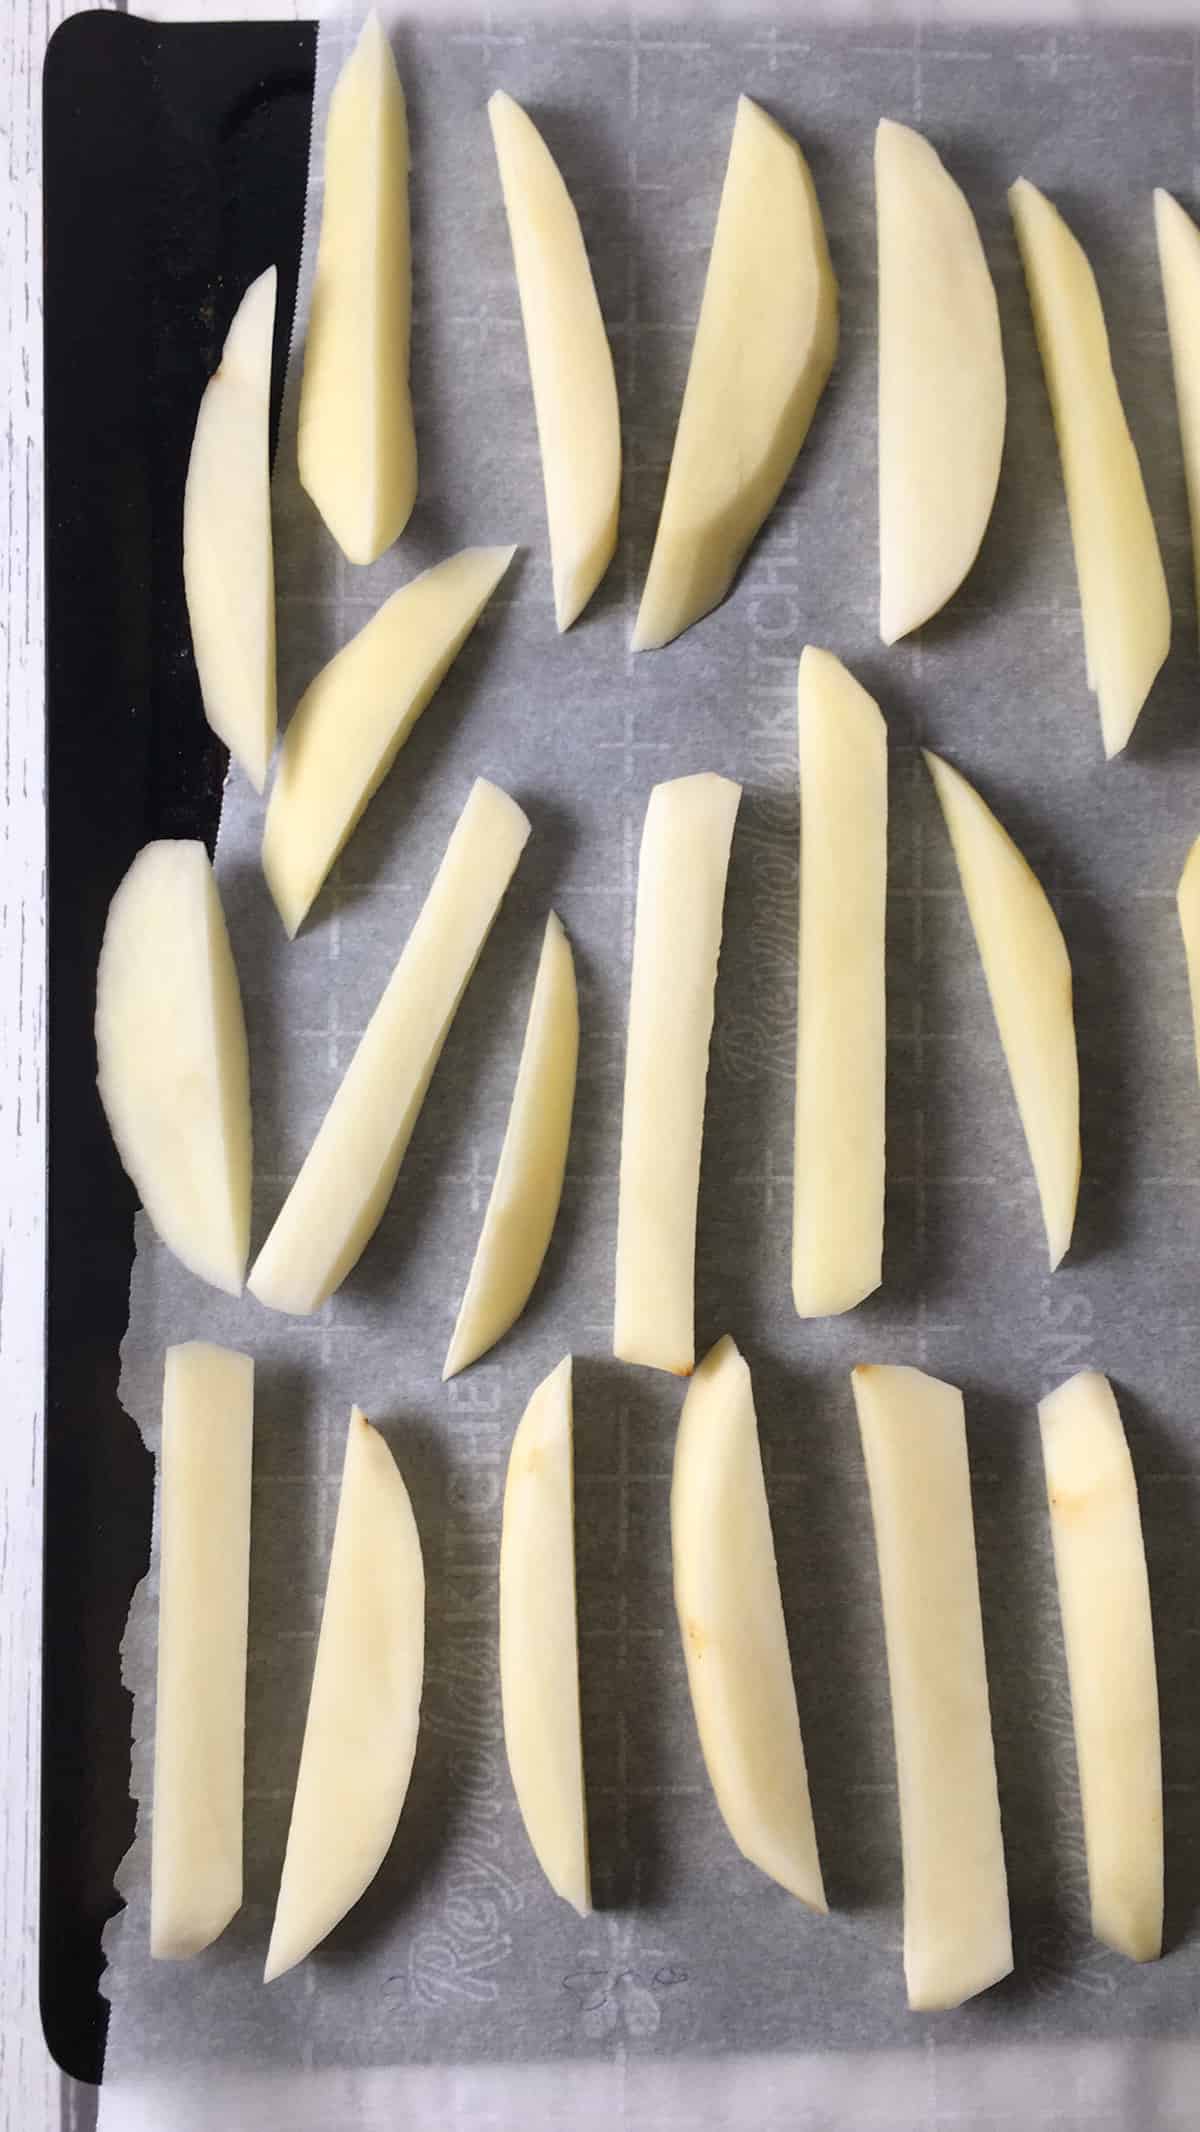 hand cut potatoes for fries